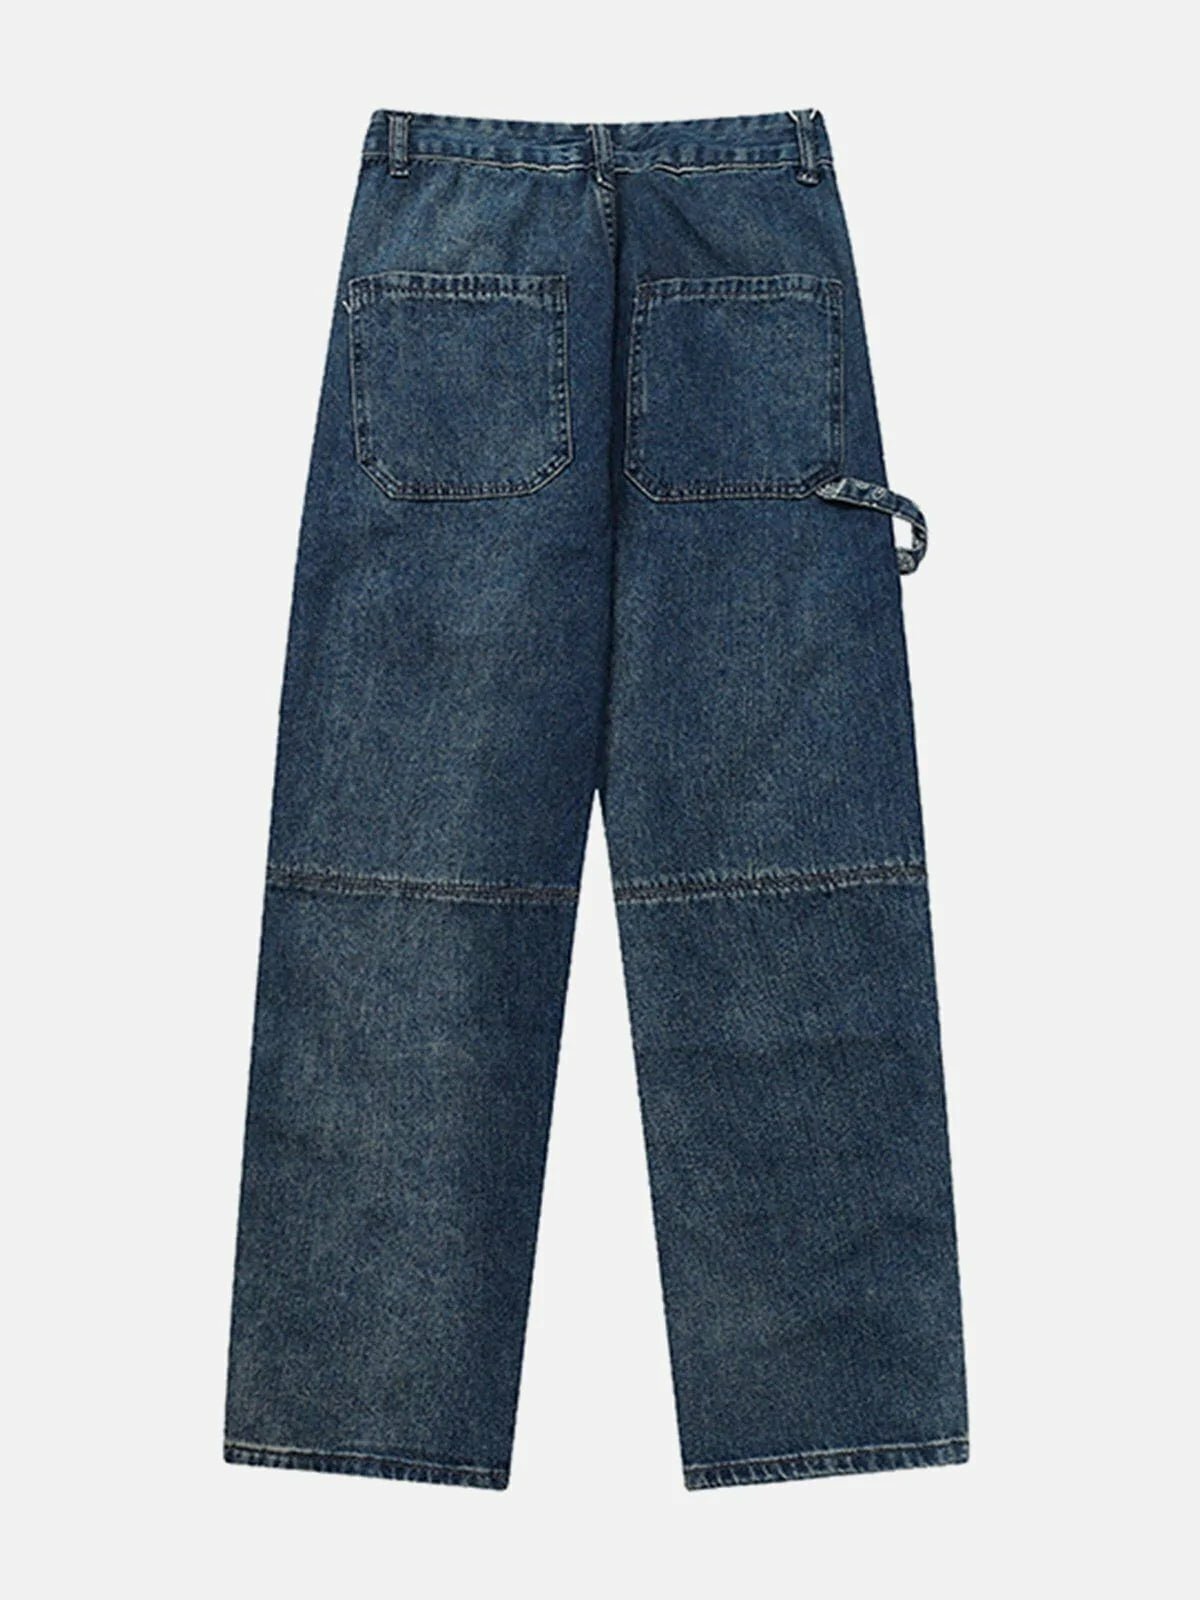 patchwork denim jeans edgy streetwear essential 4843